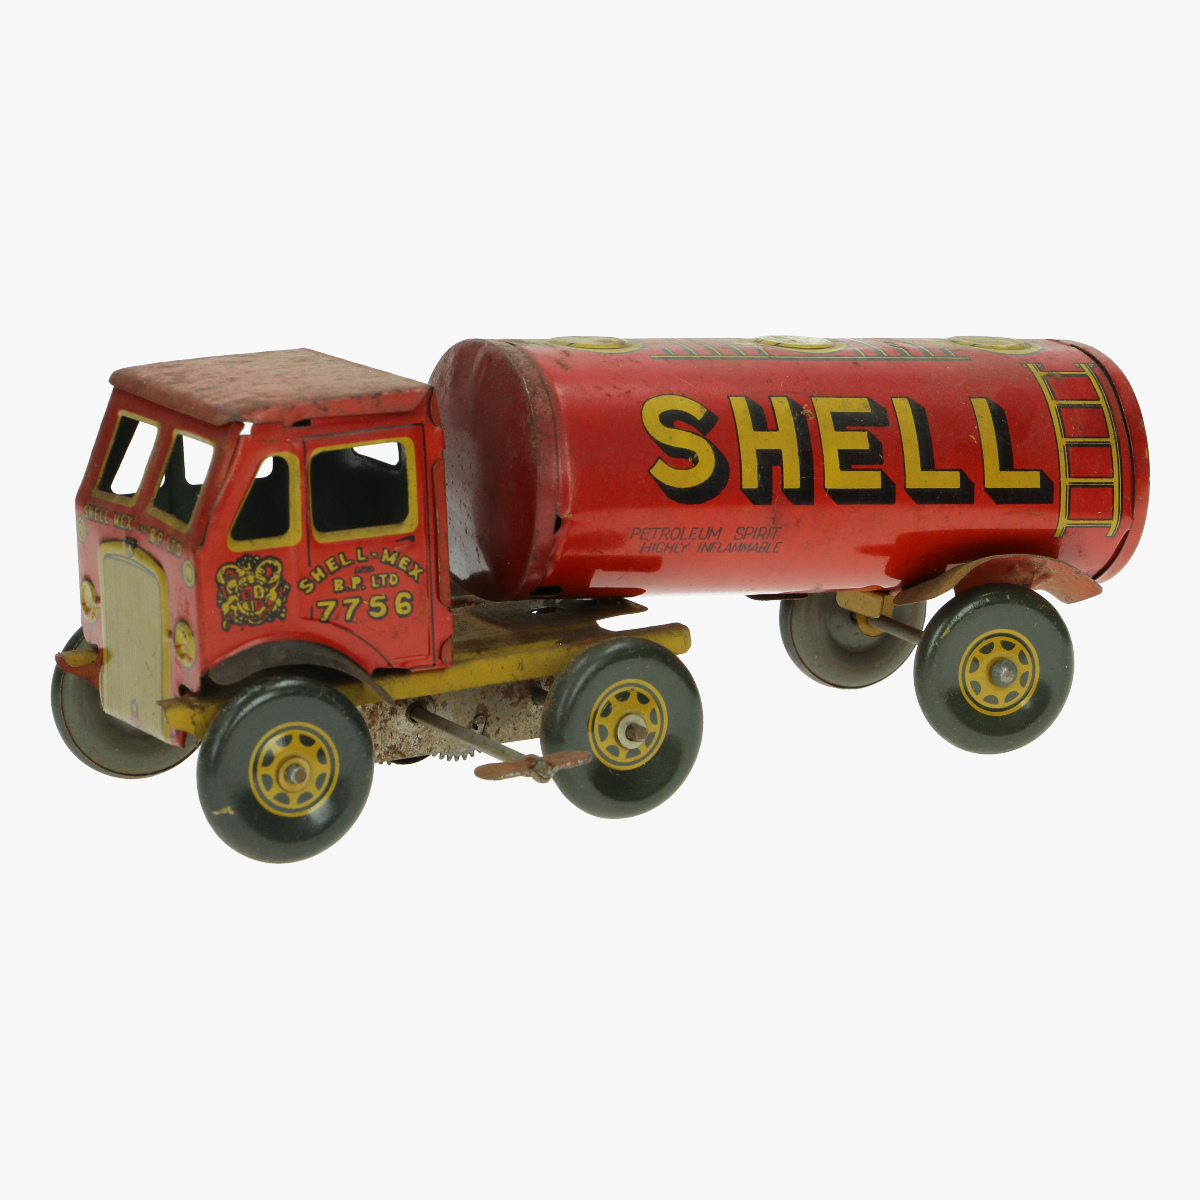 Afbeeldingen van oude blikken tankwagen shell made in GB